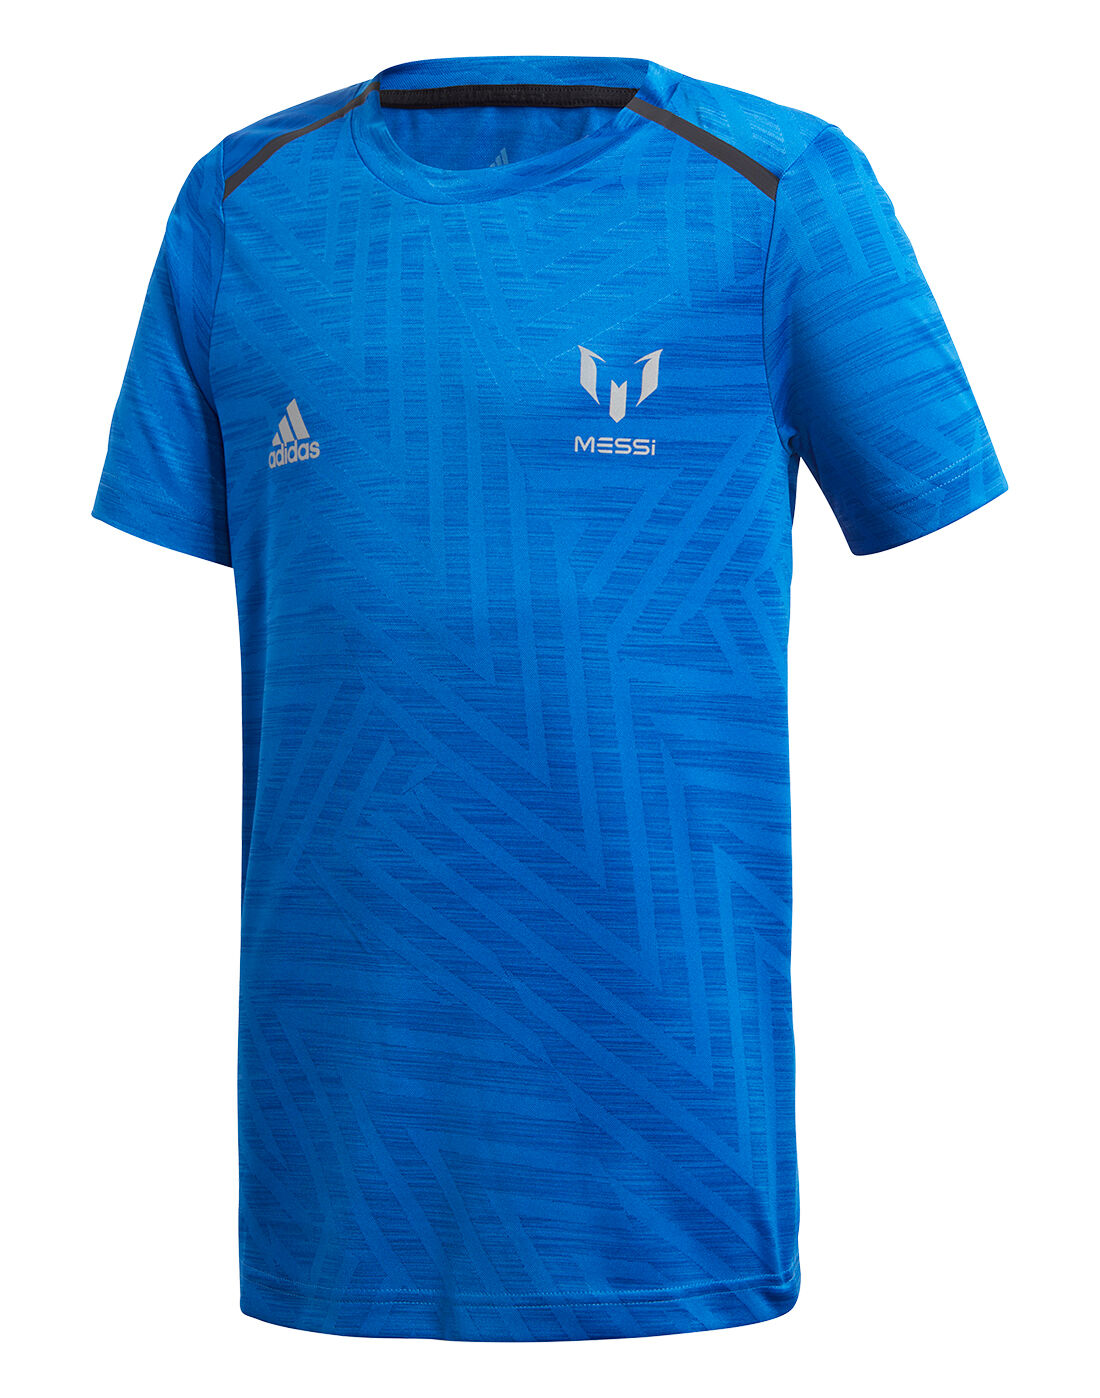 Boy's adidas Messi T-Shirt | Blue 